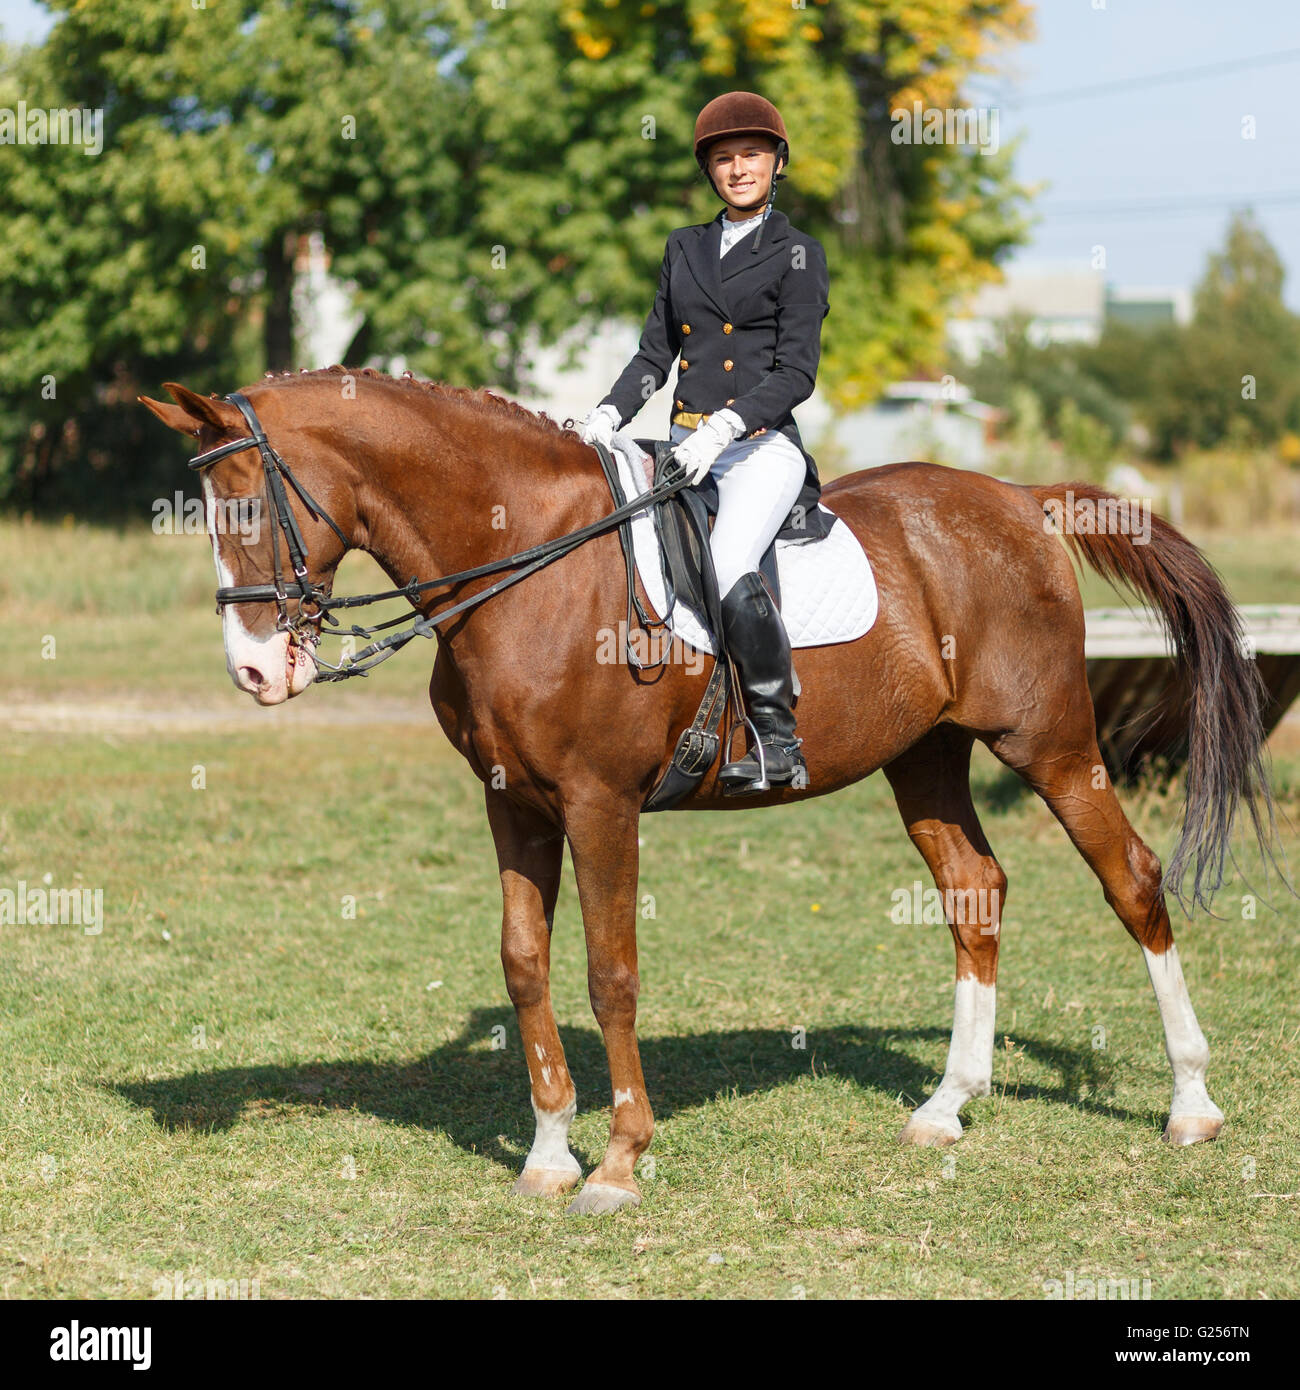 Young teenage girl riding a horse. Equestrian sportswoman jockey Stock Photo